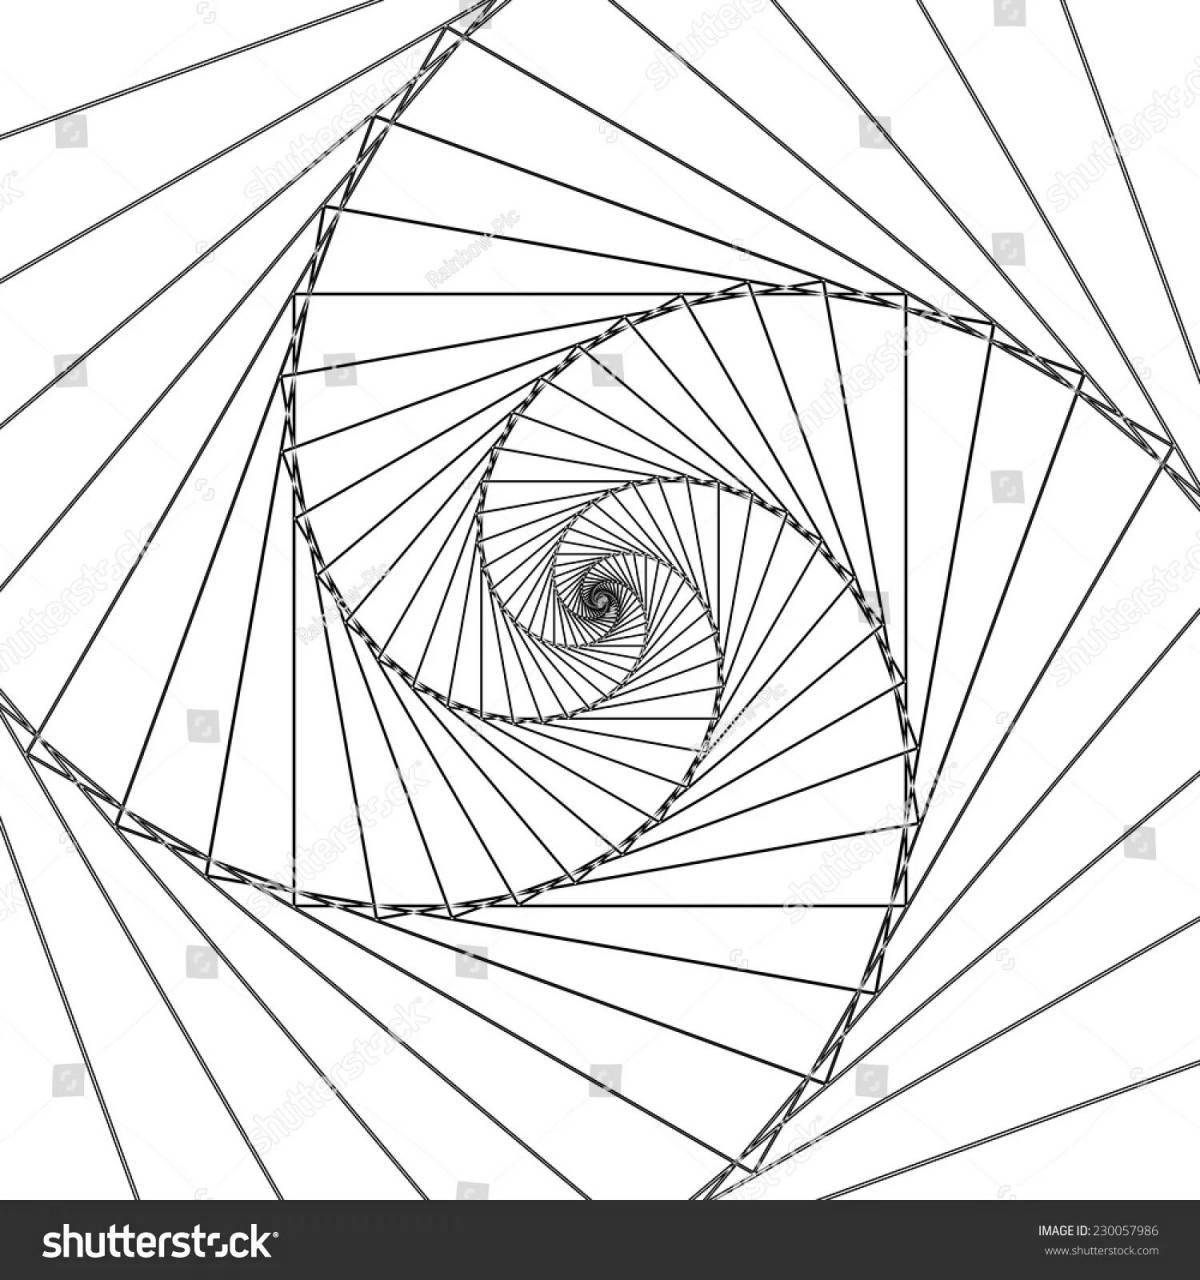 Unique coloring spiral